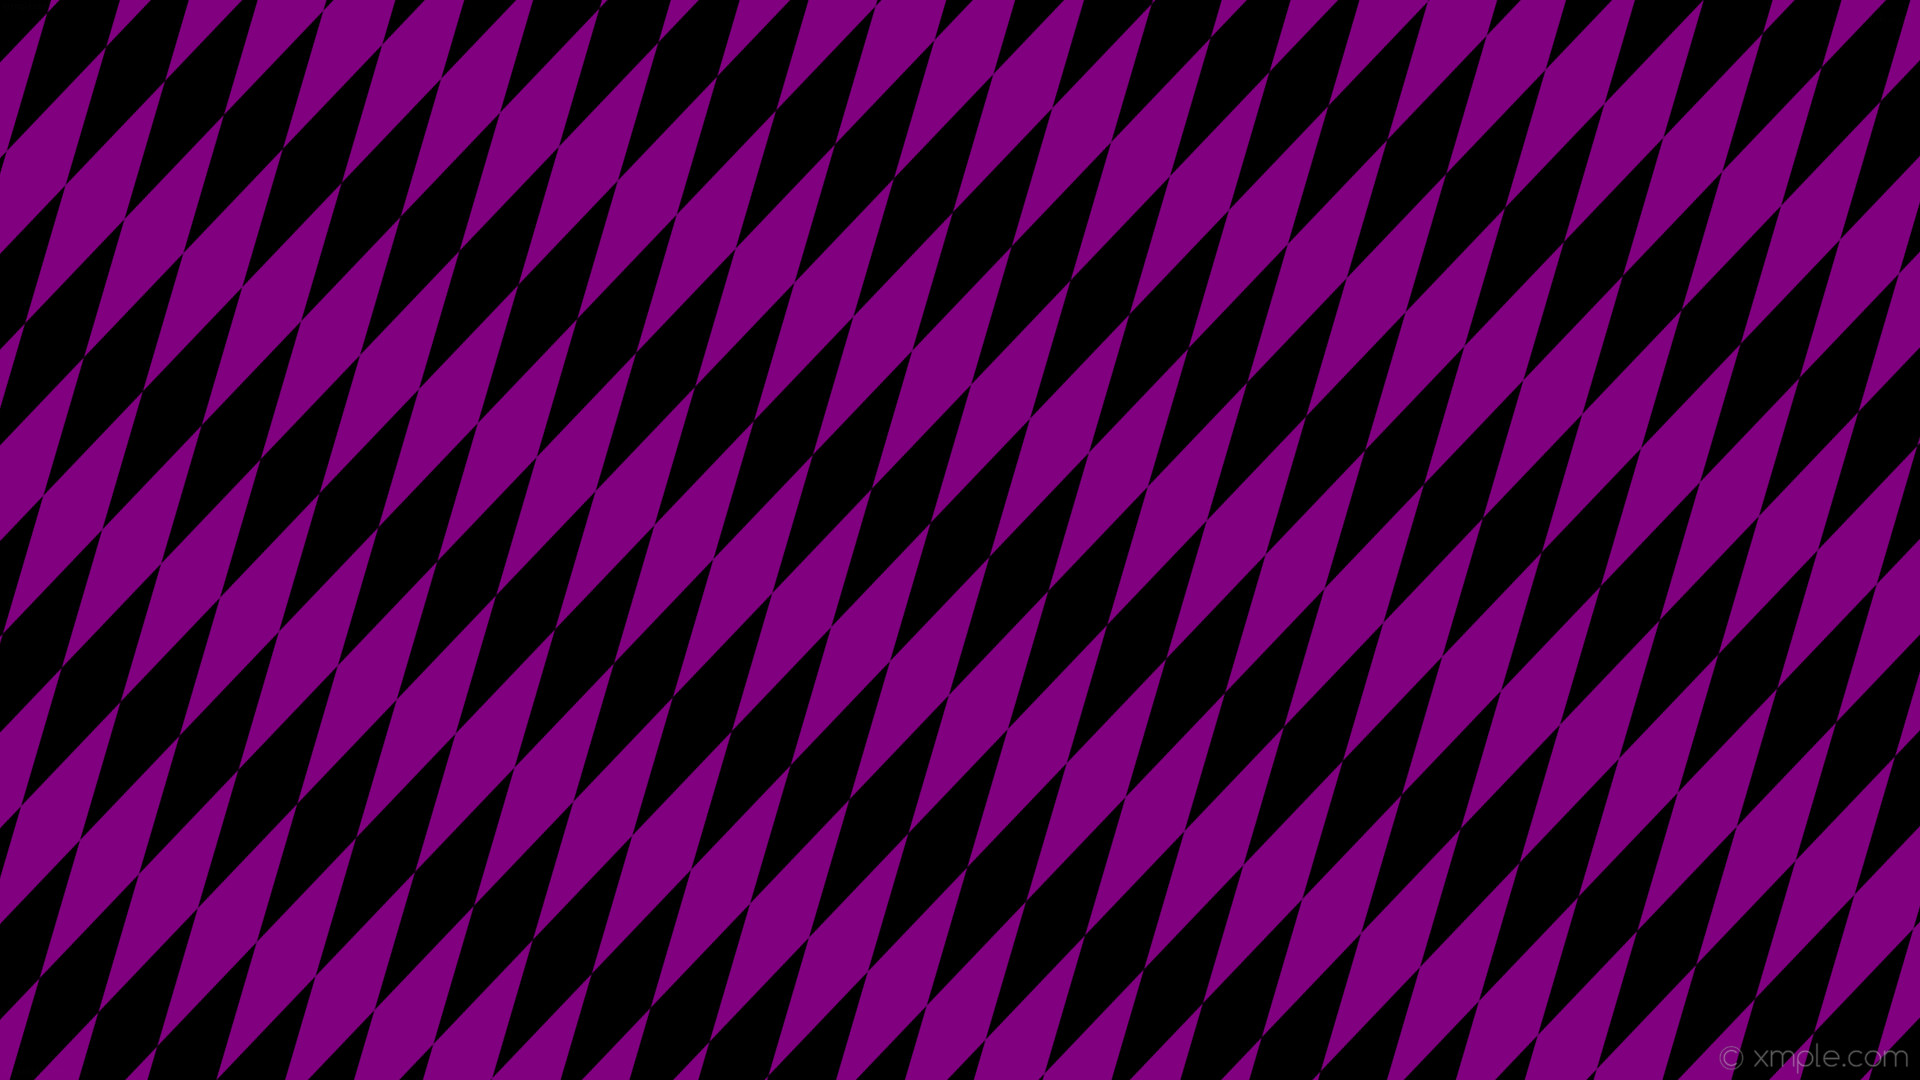 1920x1080 wallpaper rhombus black lozenge purple diamond #000000 #800080 60Â° 280px  68px